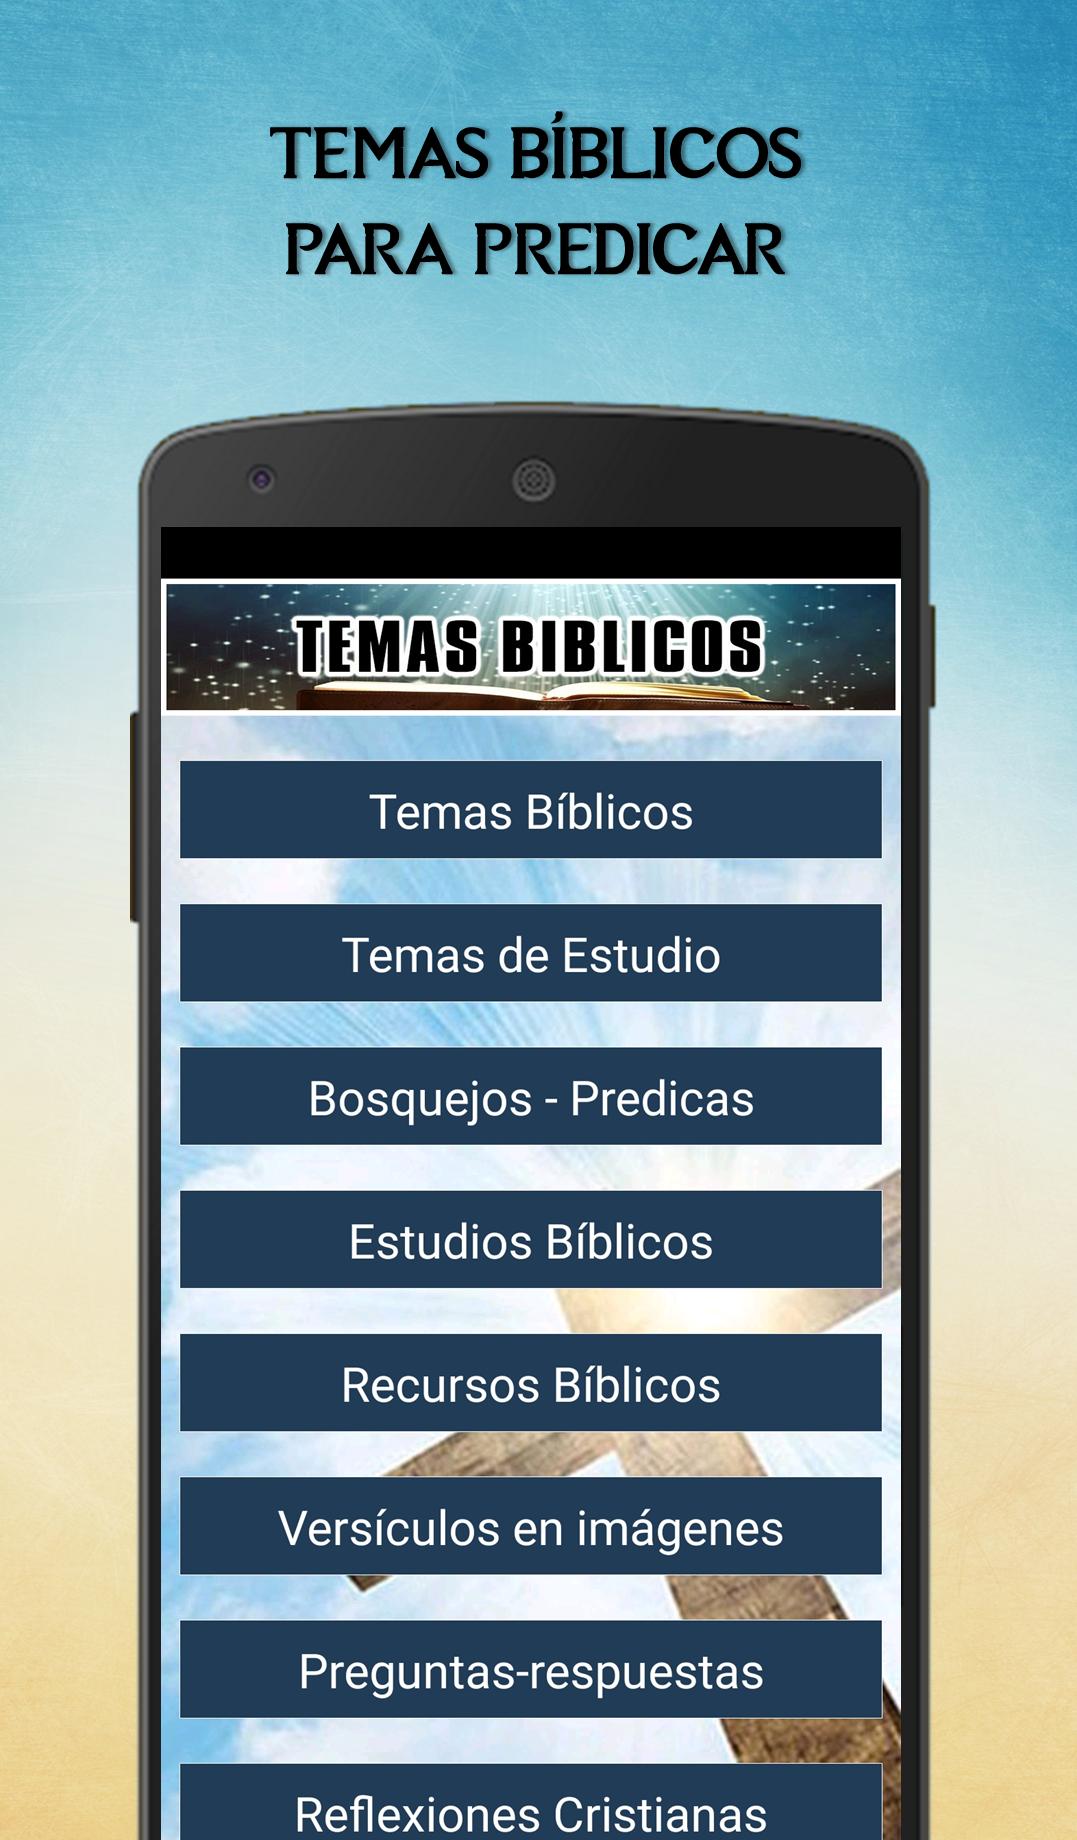 Temas Bíblicos para predicar 14.0.0 Screenshot 17